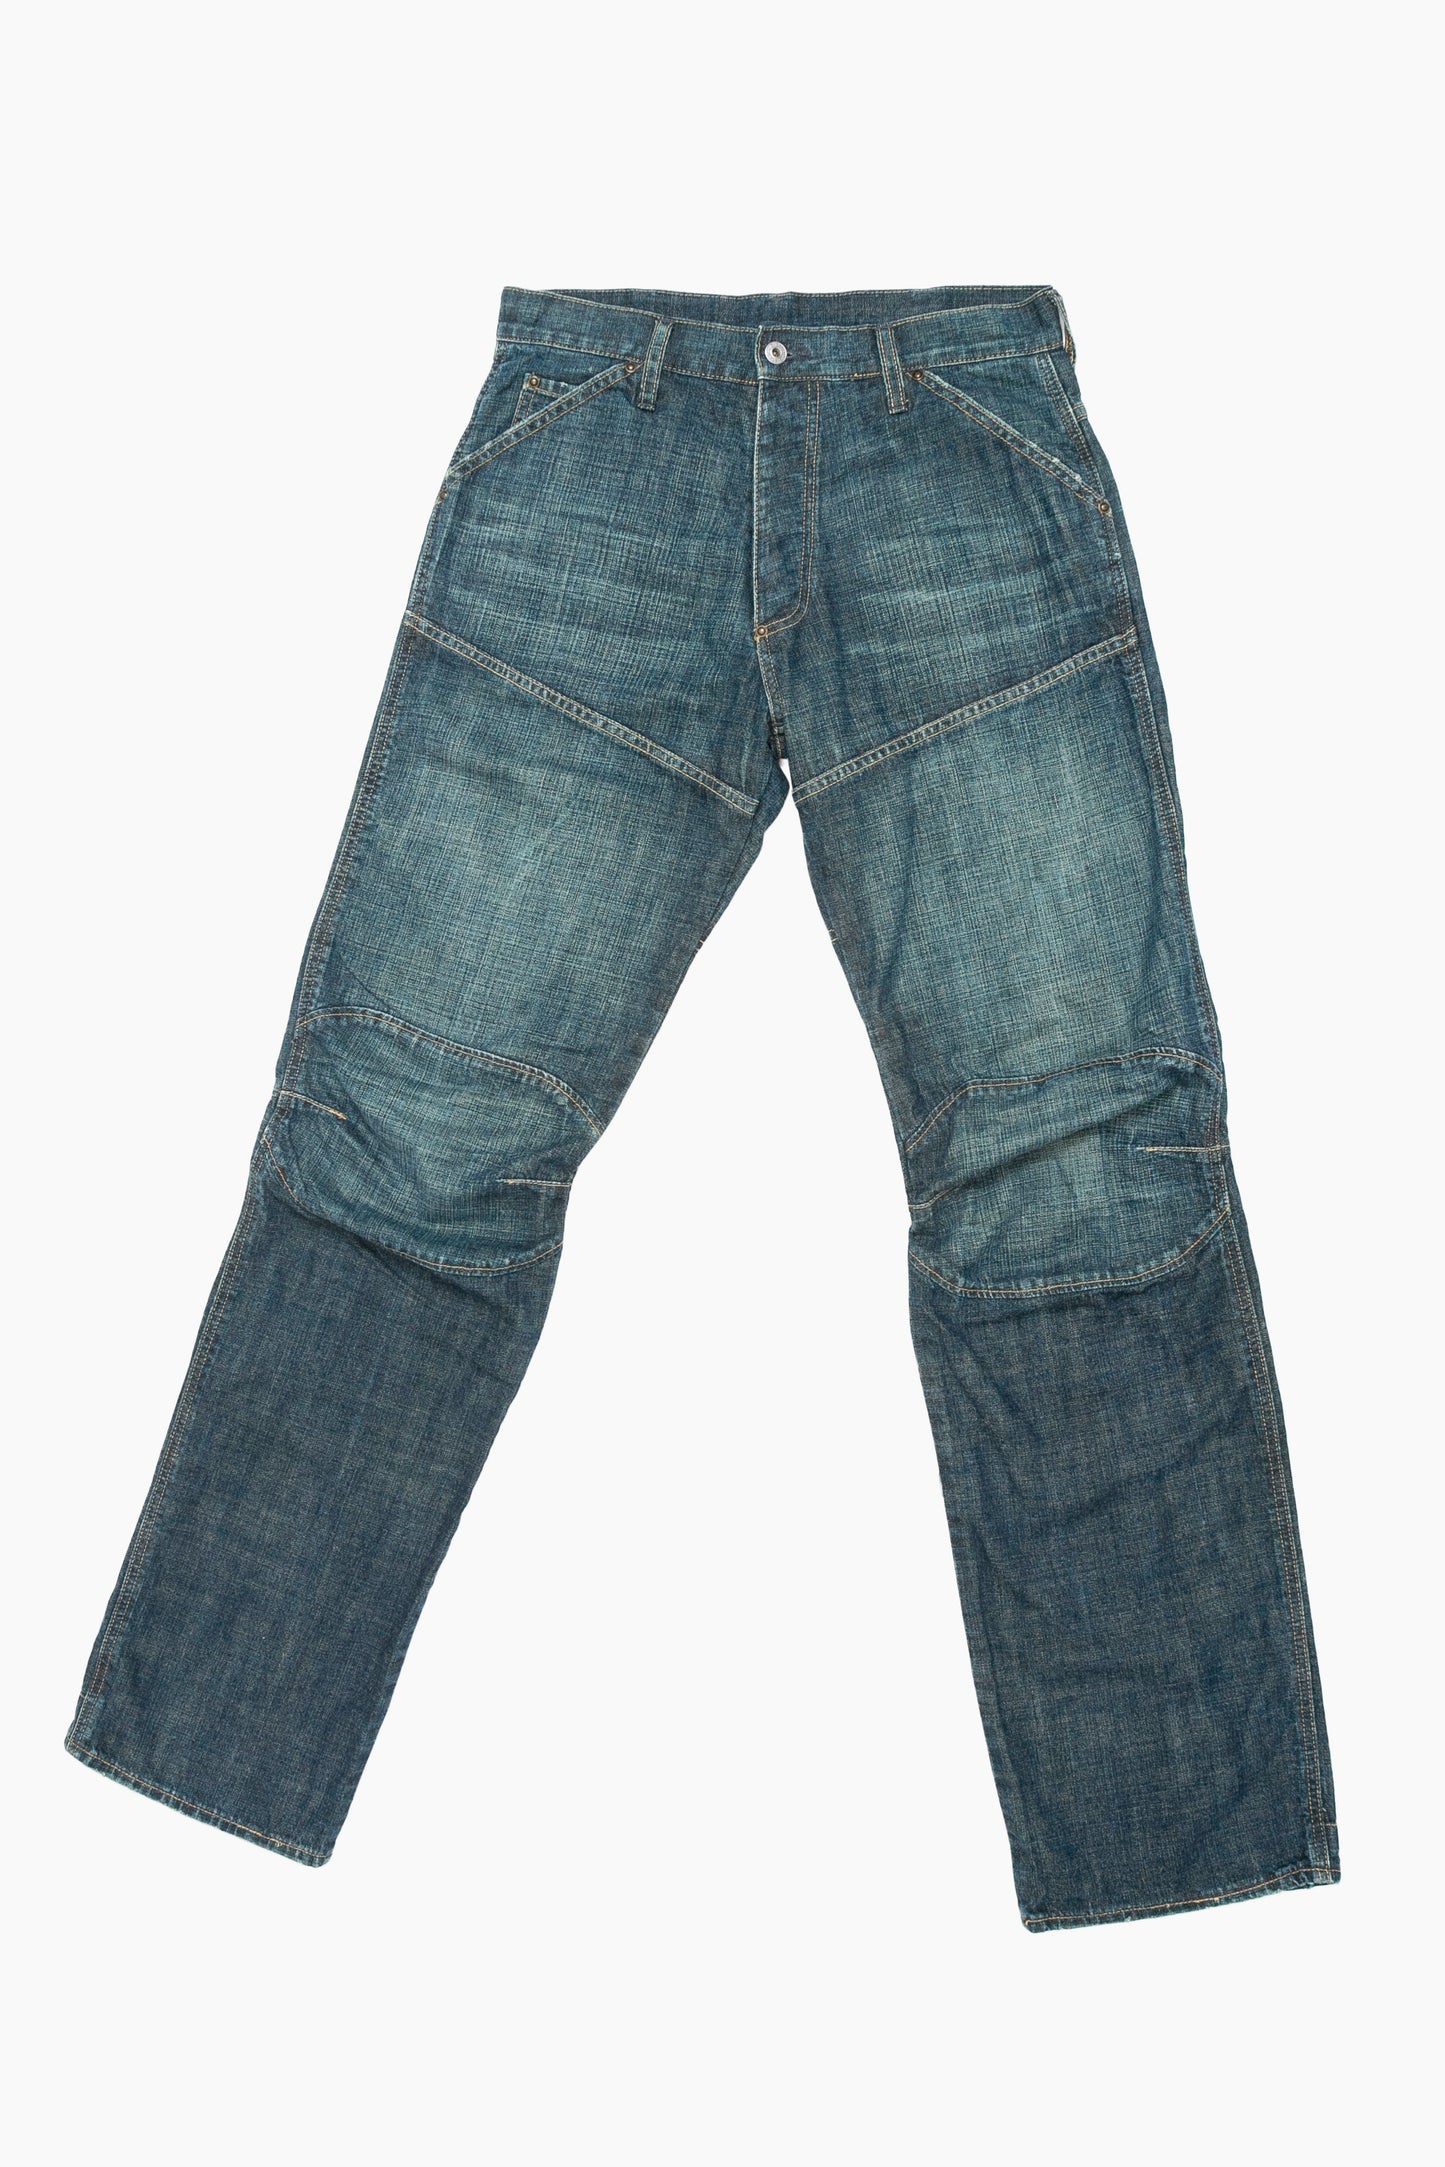 G-Star Wash Jeans